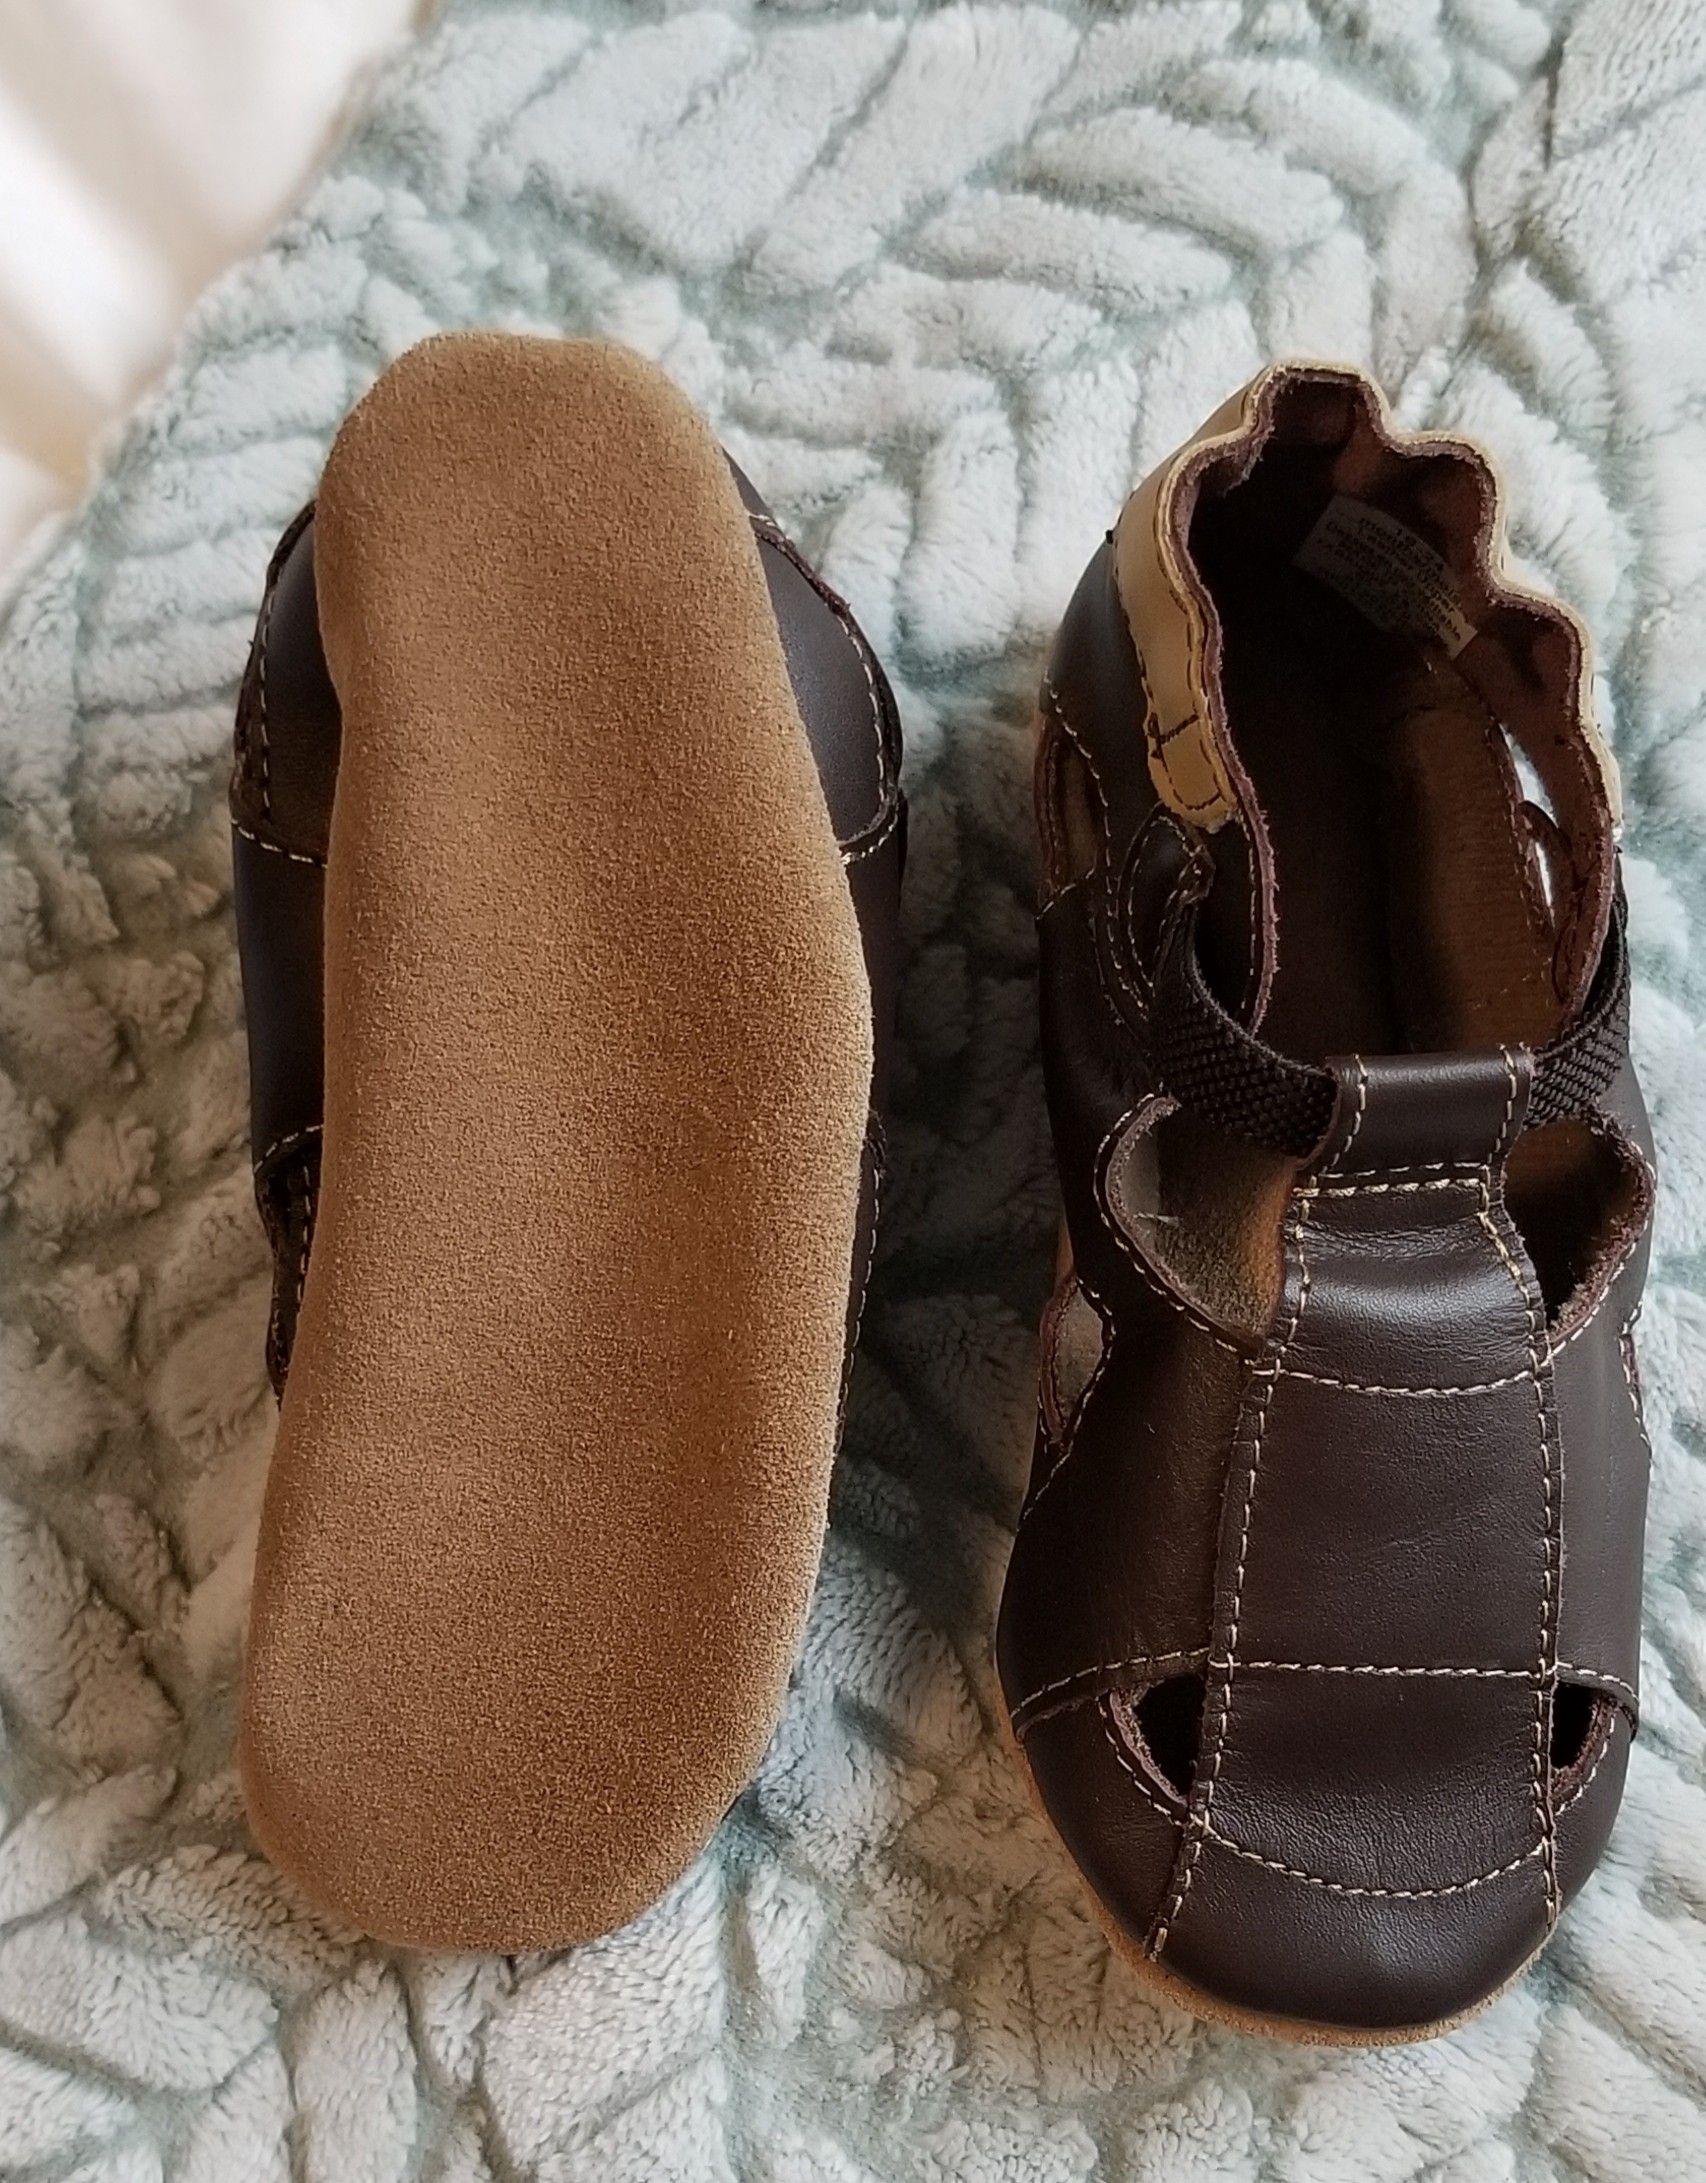 Robeez Soft Sole Shoes (18-24 months)